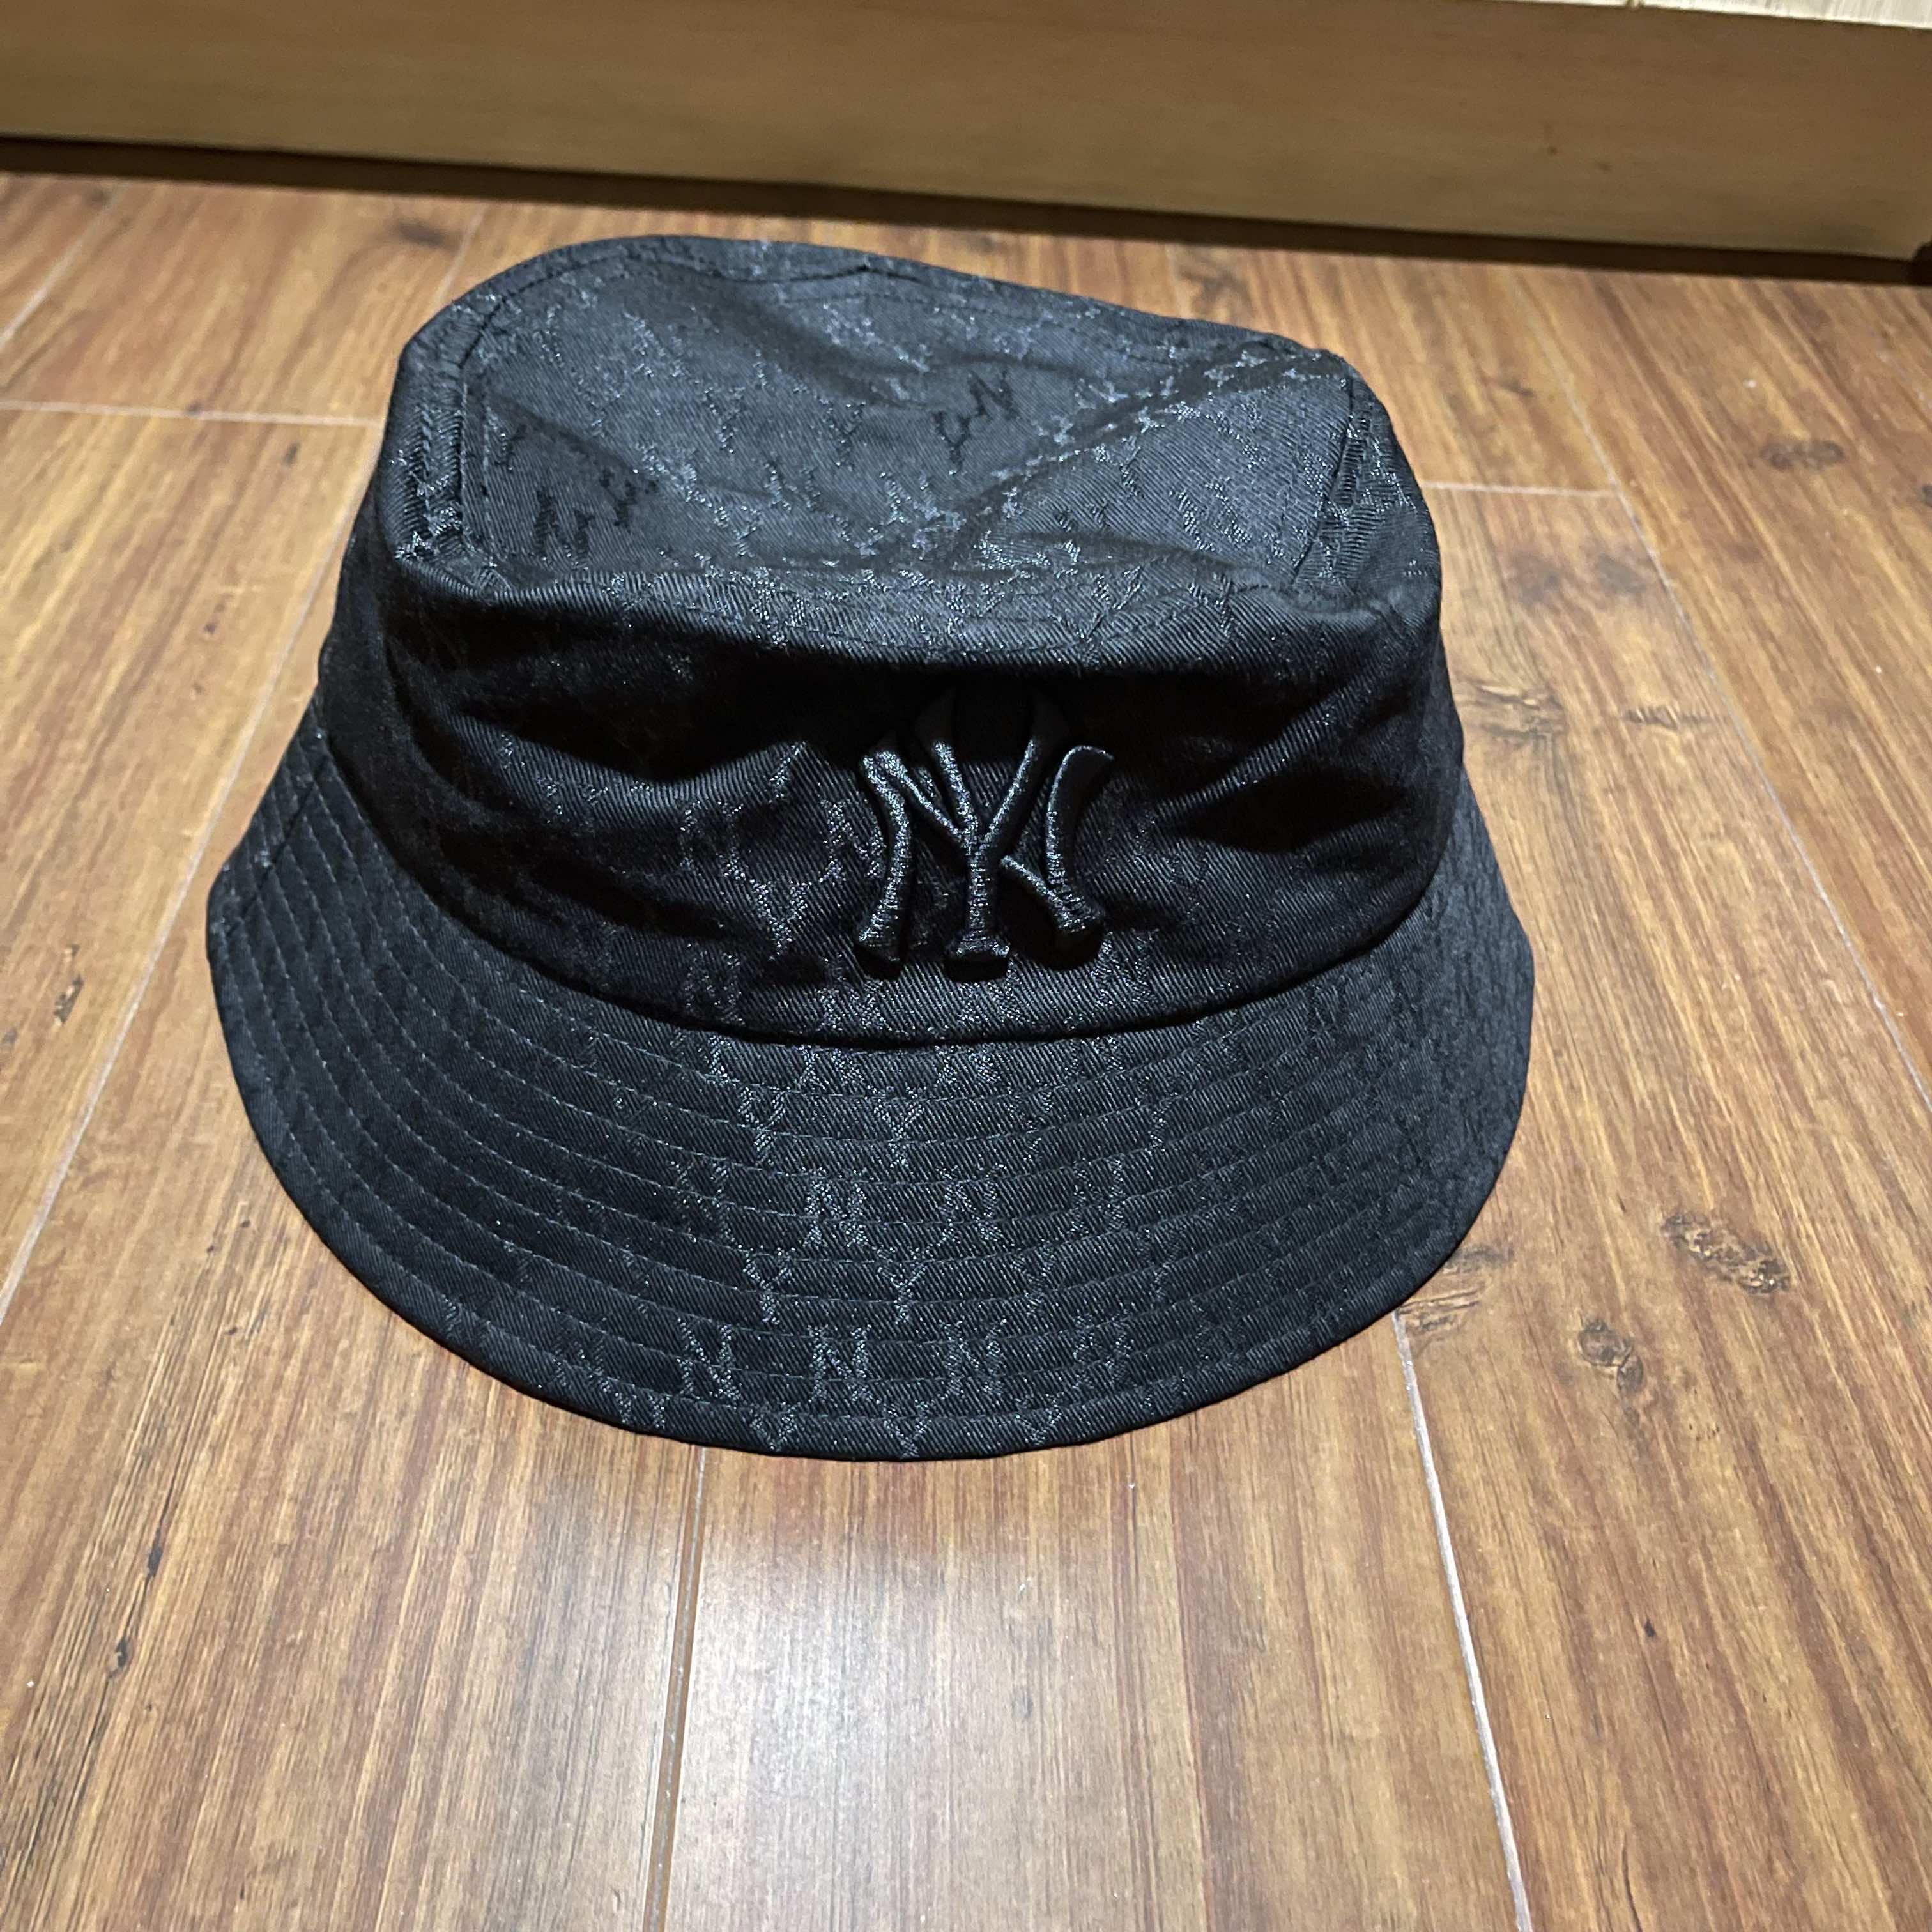 PO ‼️ mlb korea bucket hat